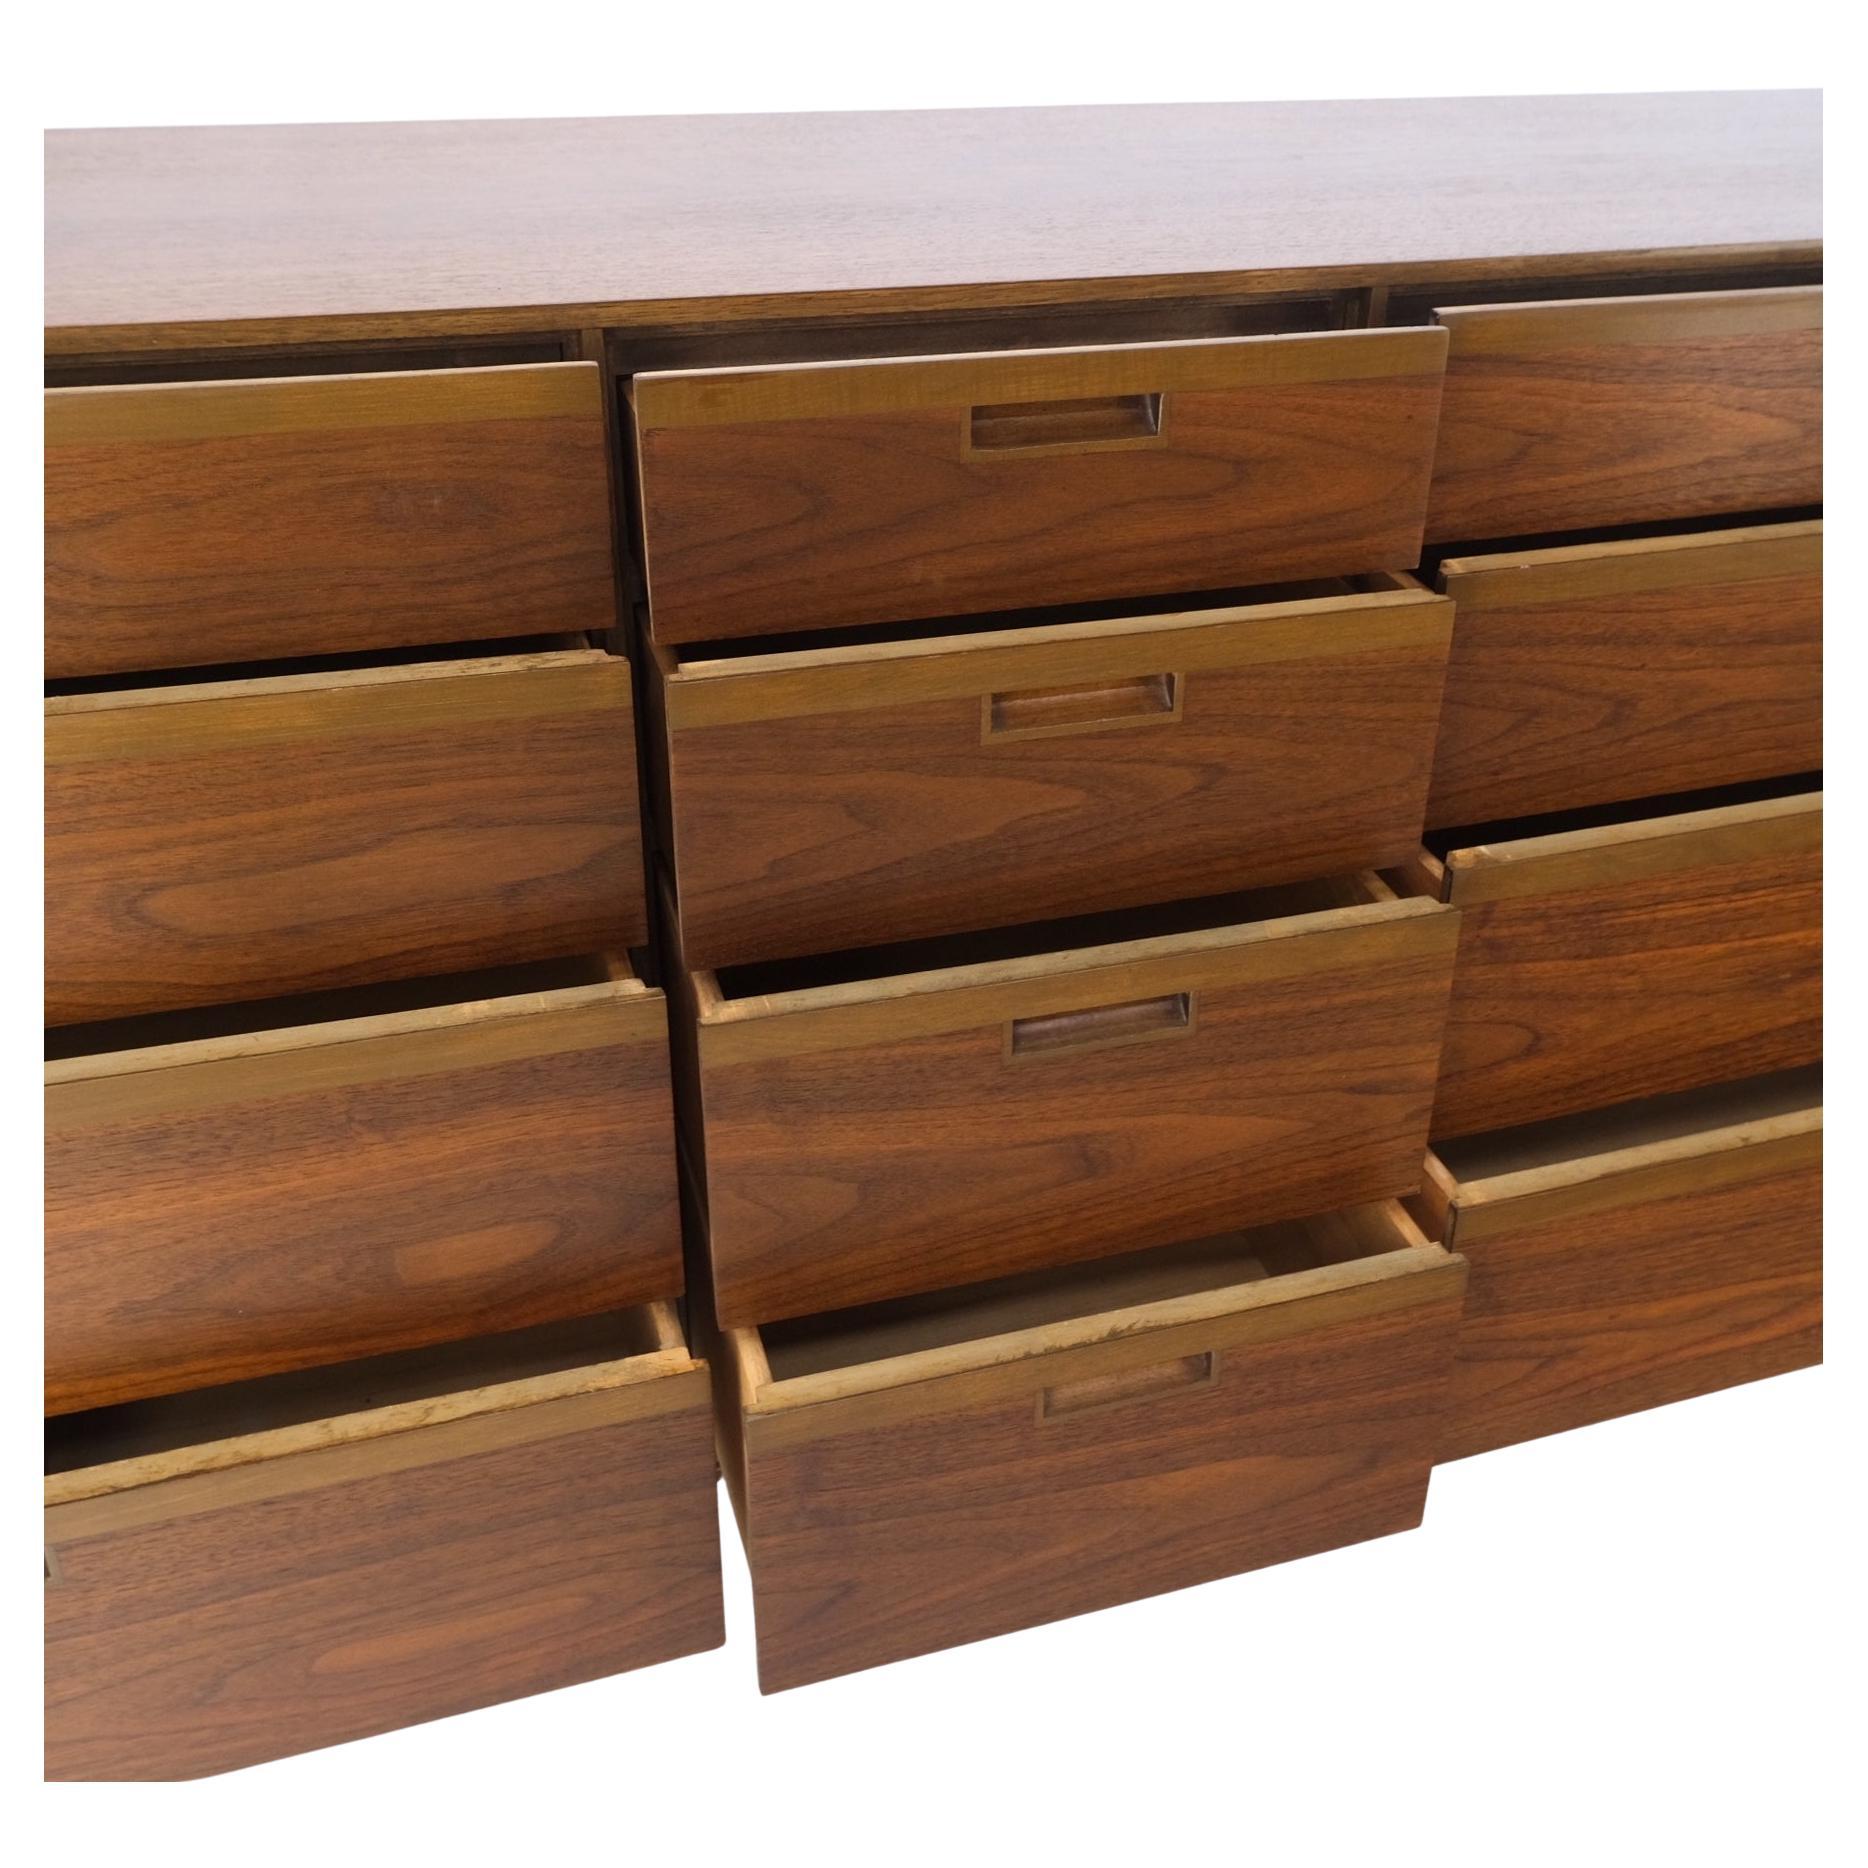 Danish Mid-Century Modern walnut 12 drawers long credenza dresser MINT!.